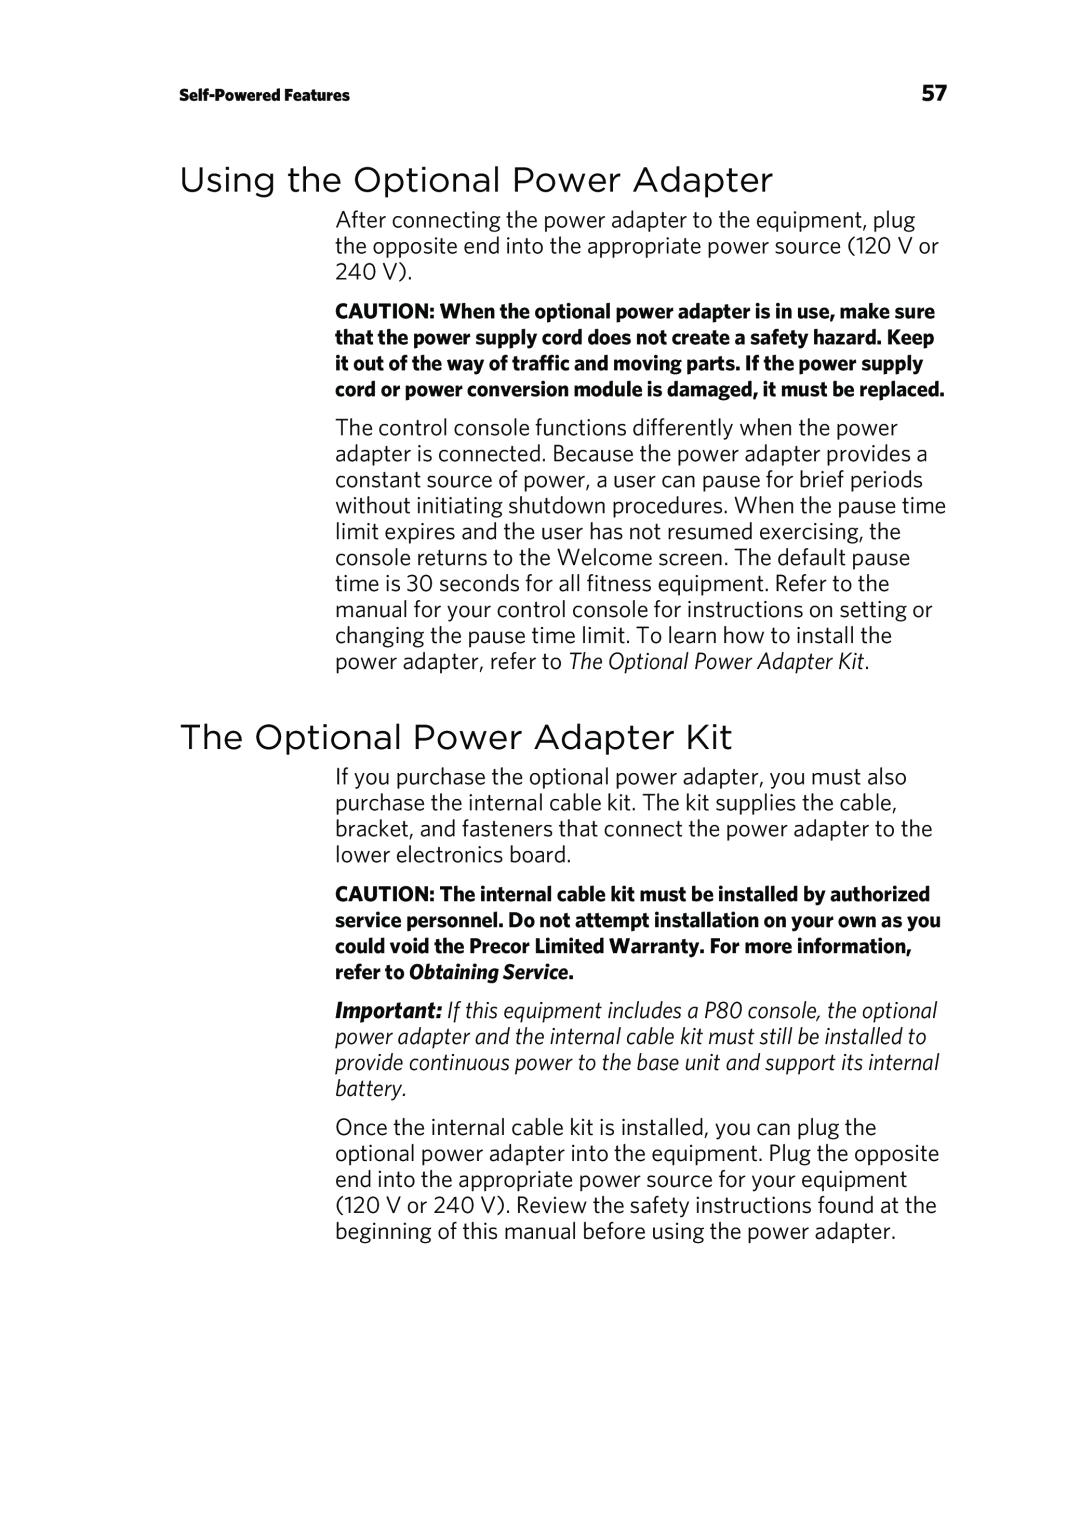 Precor P80 manual Using the Optional Power Adapter, The Optional Power Adapter Kit, Self-PoweredFeatures 